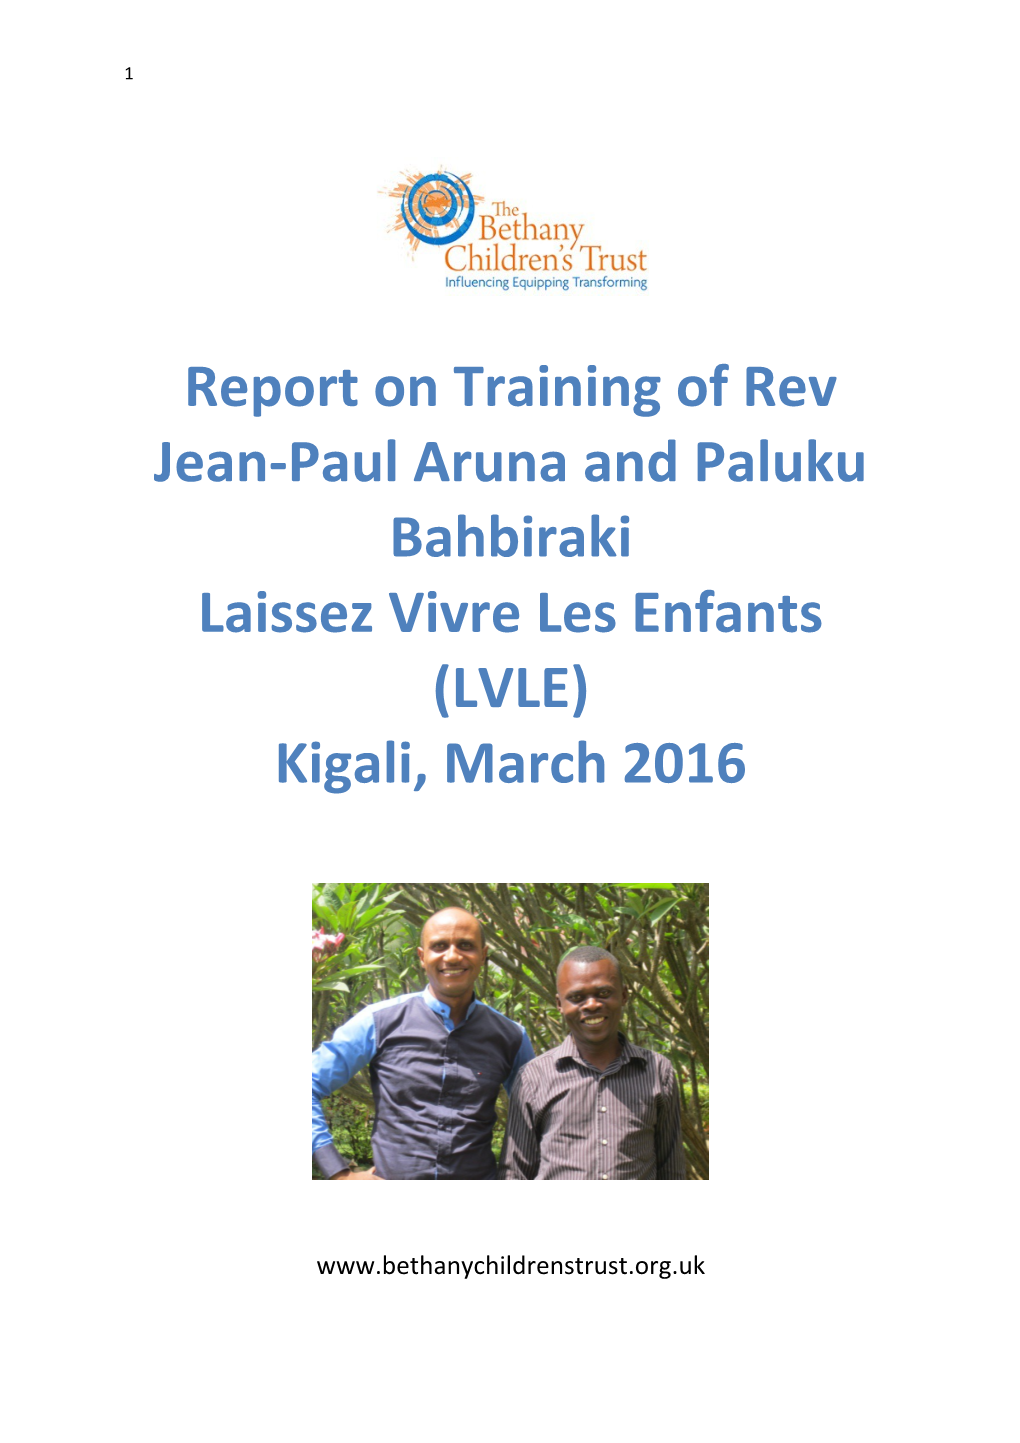 Report on Training of Rev Jean-Paul Aruna and Palukubahbiraki